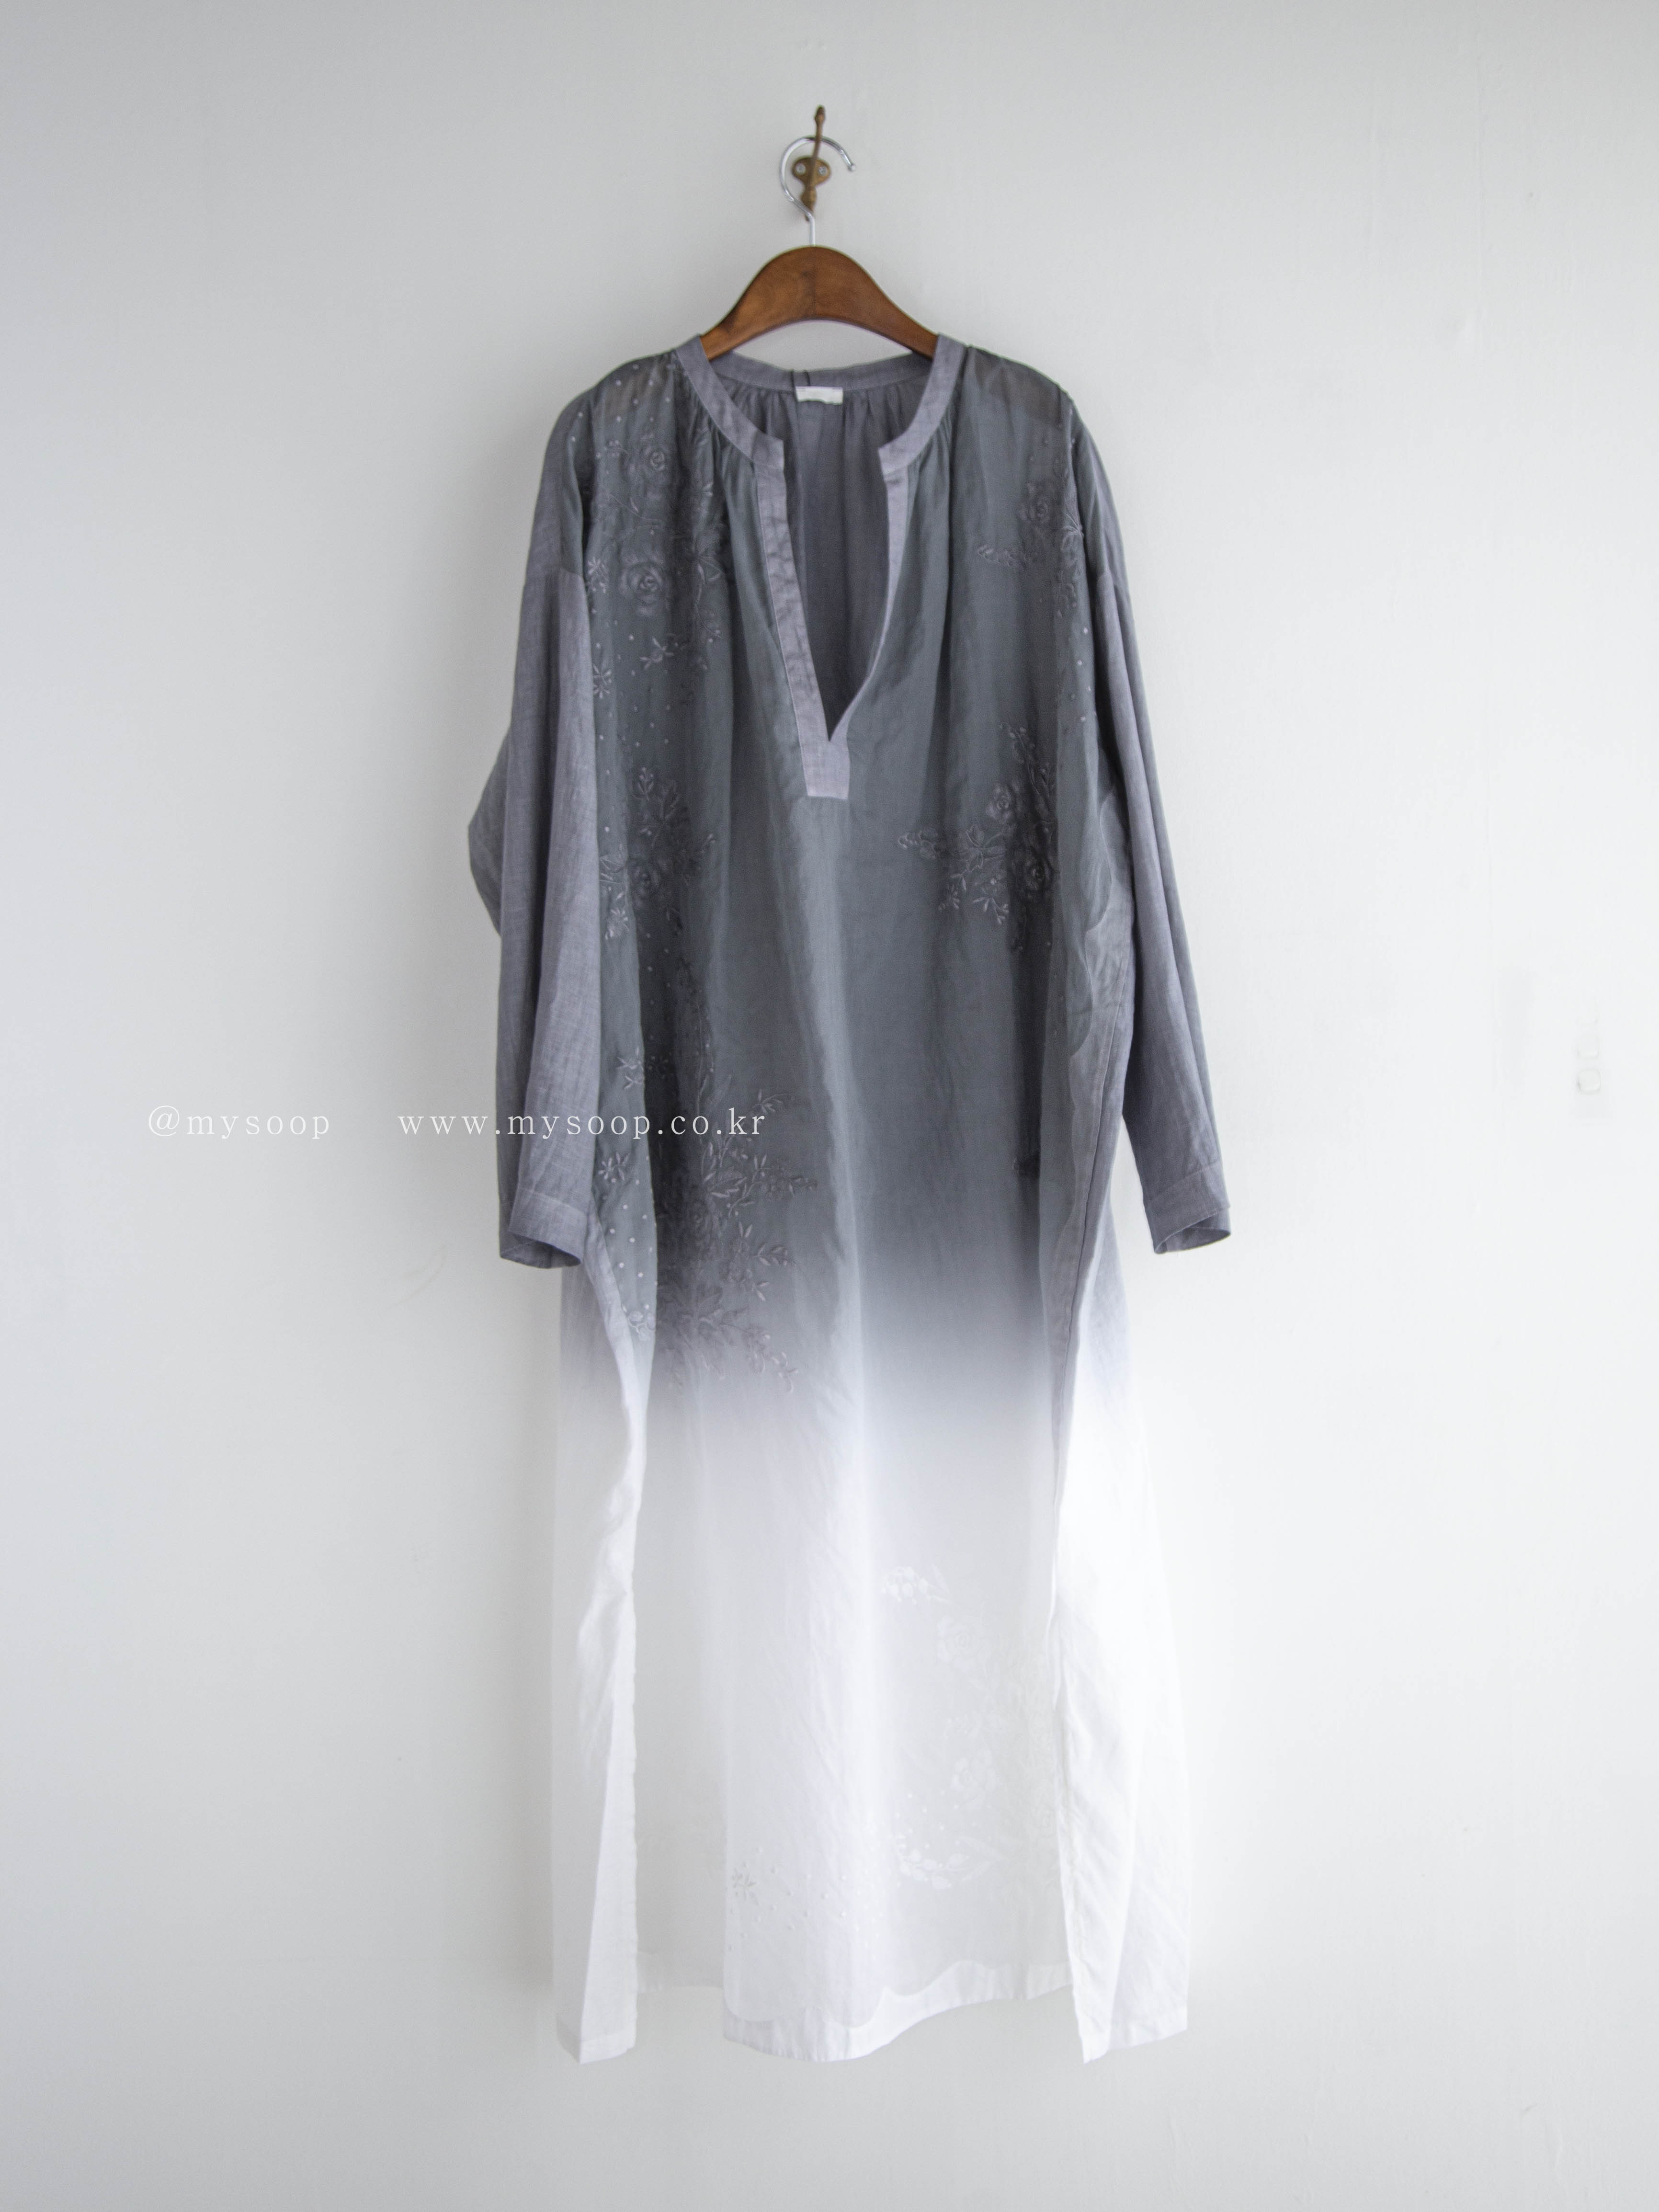 Table cloth lace dress (blue gradation)